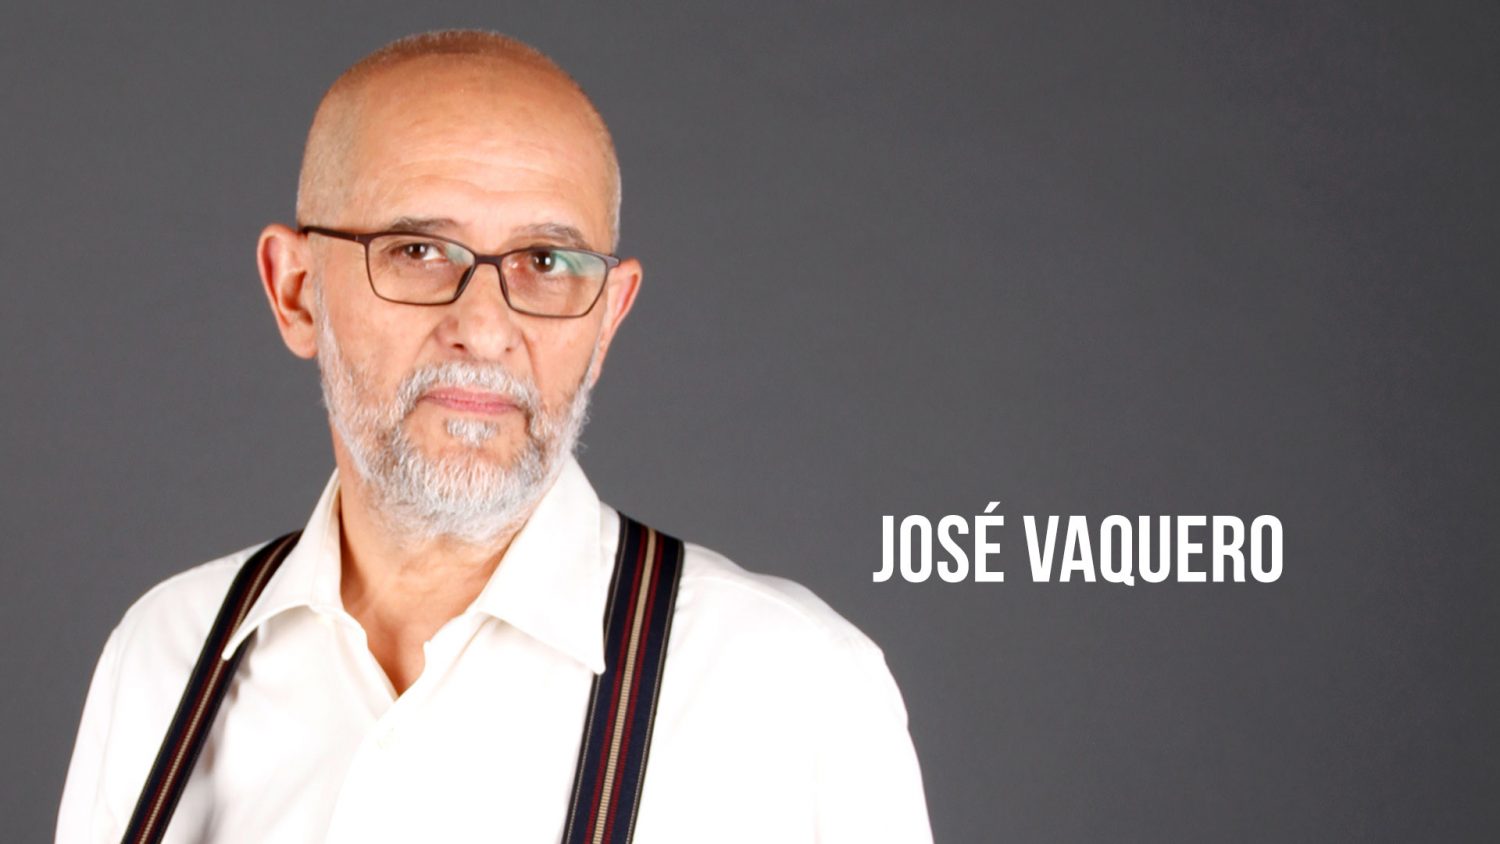 José Vaquero - Videobook Actor